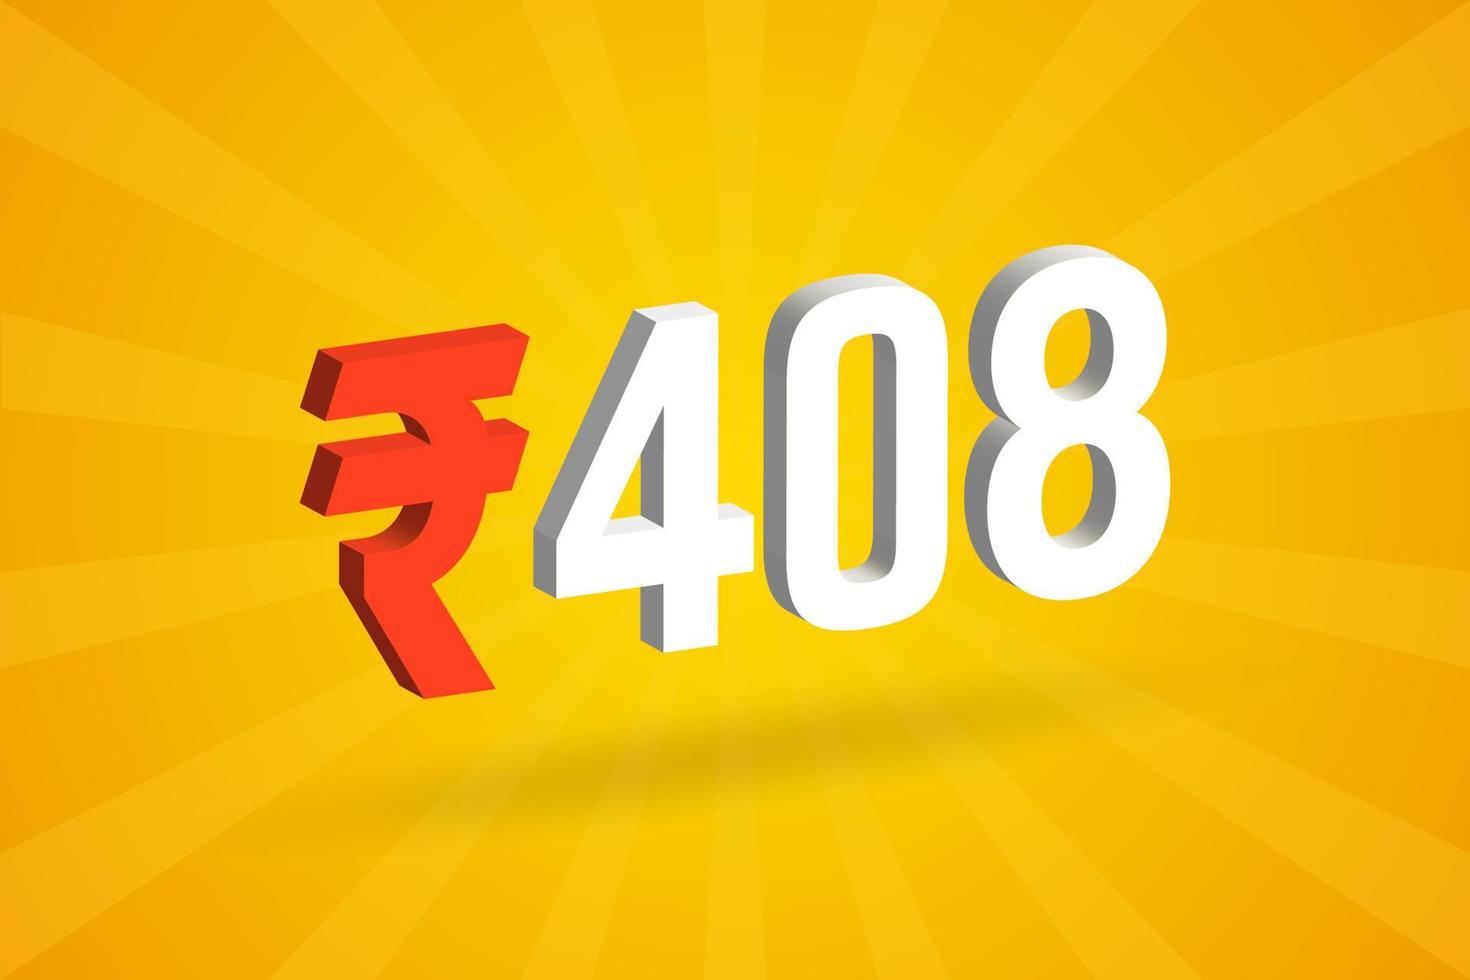 408 rupia 3d símbolo imagen vectorial de texto en negrita. 3d 408 rupia india signo de moneda ilustración vectorial vector